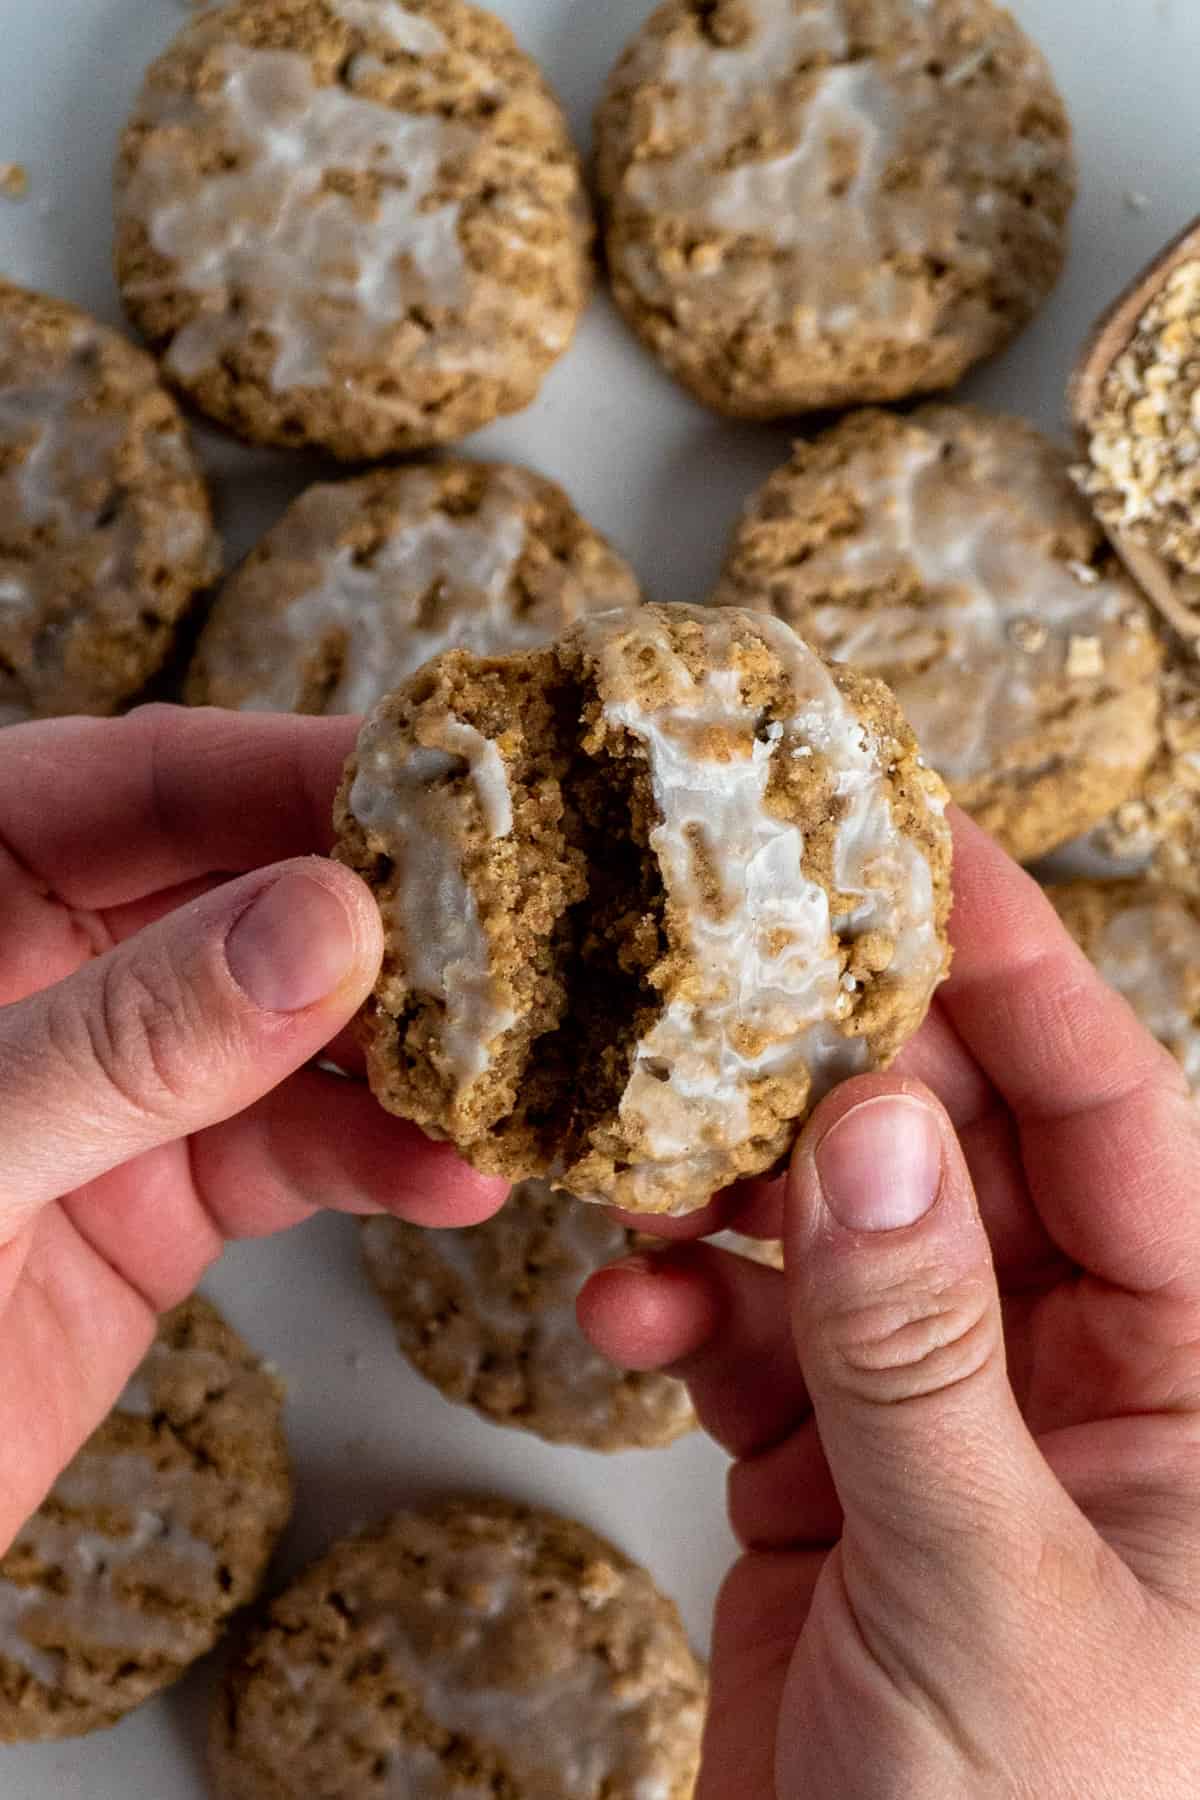 Hands breaking an oatmeal cookie in half.